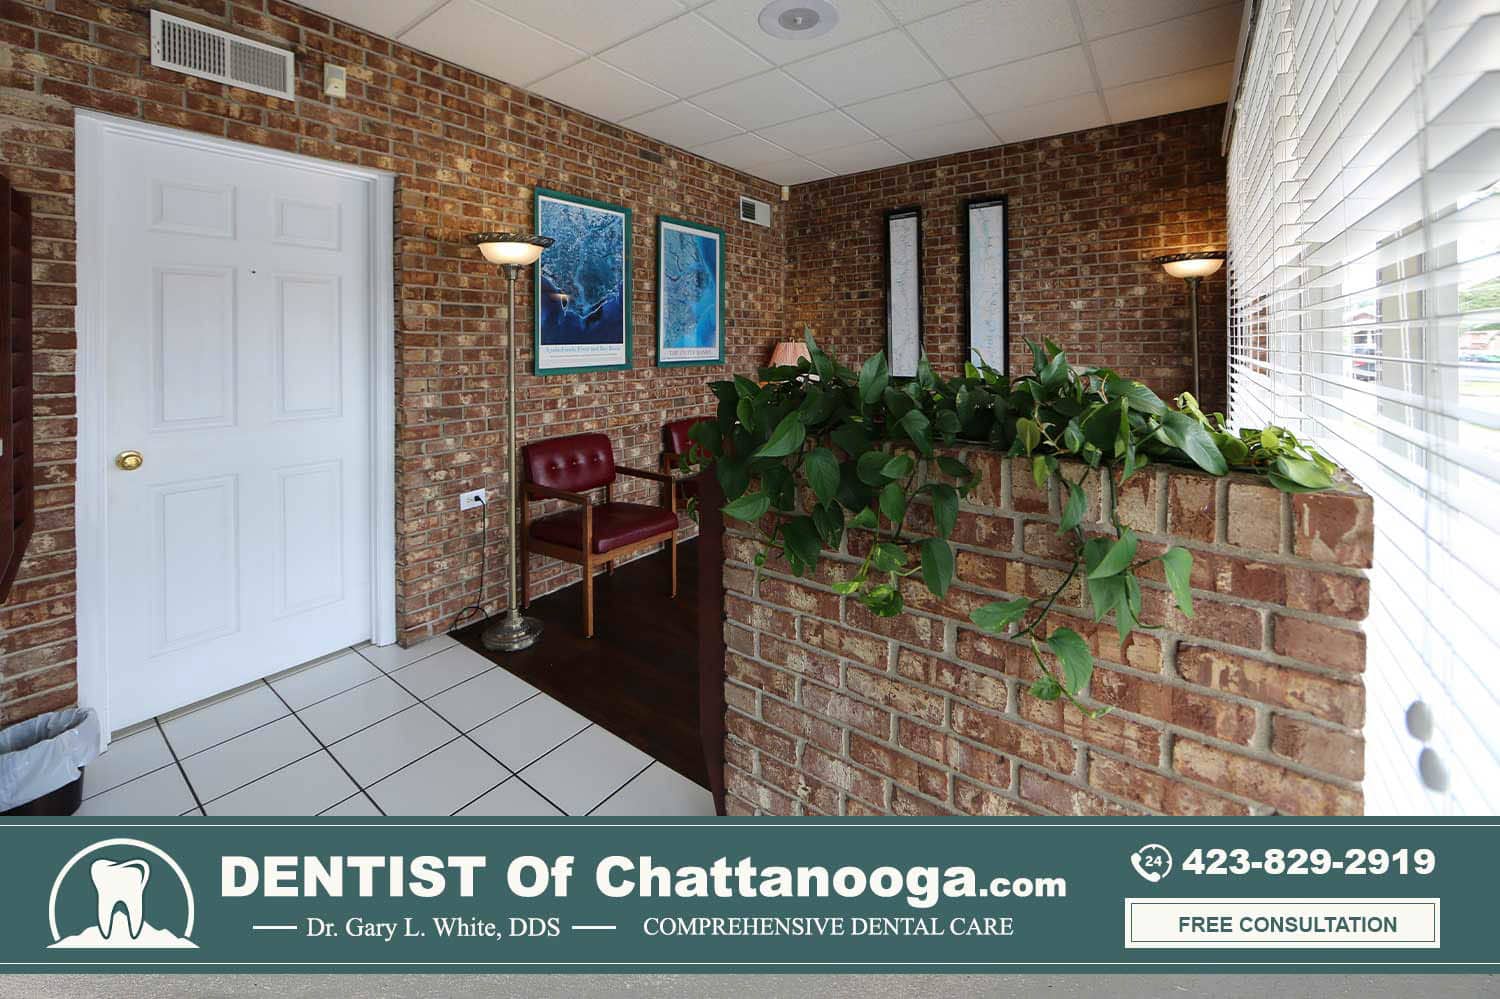 Dentist Of Chattanooga, US, dentistofchattanooga